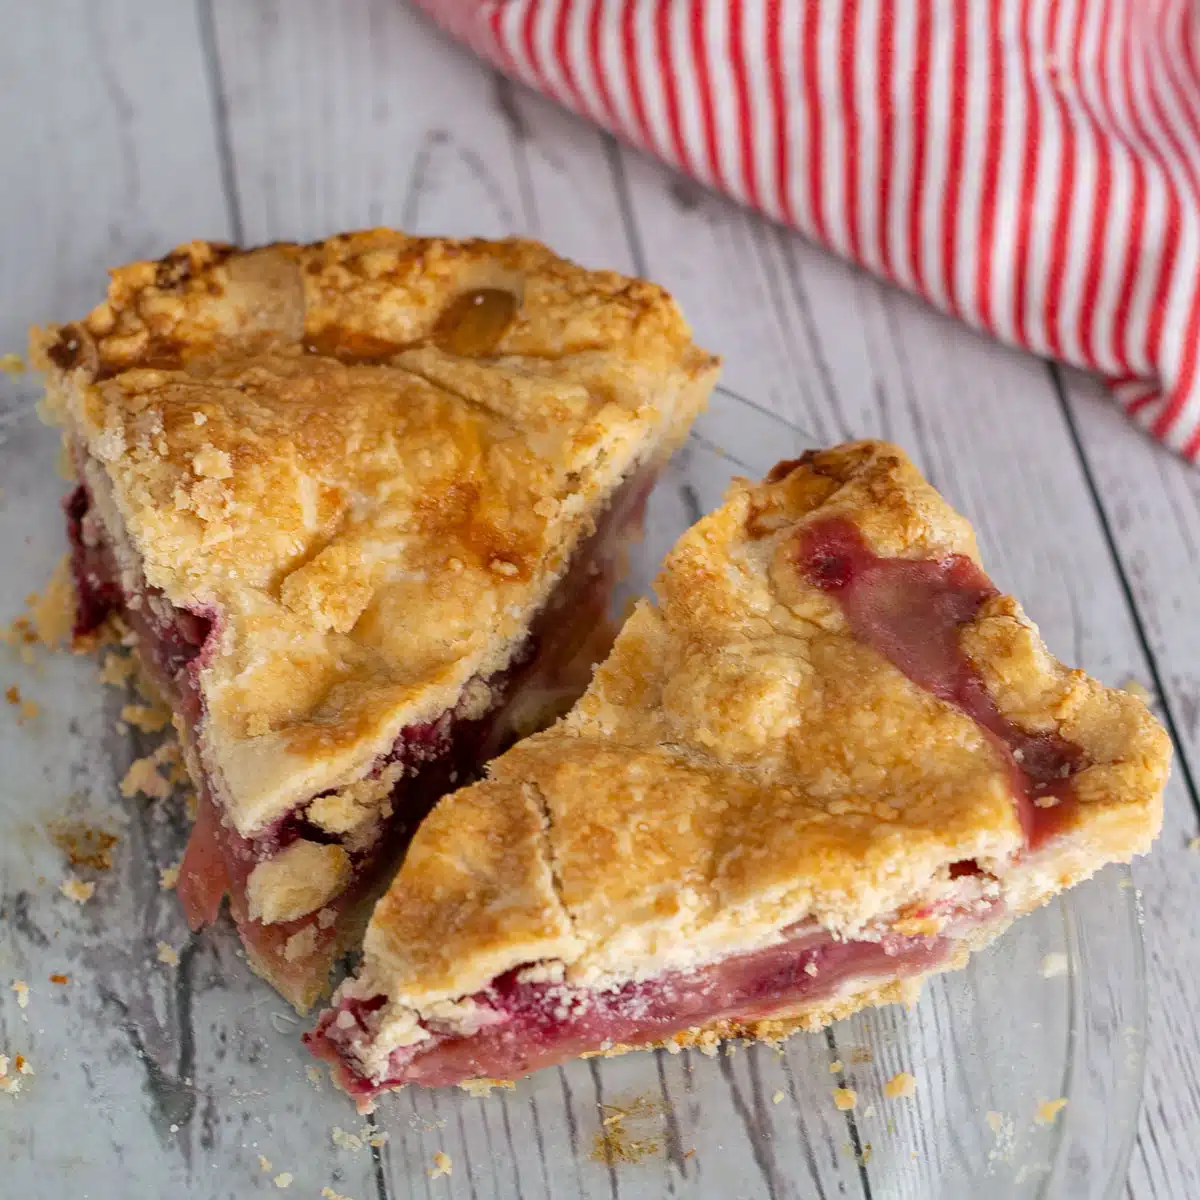 Square image of apple-cranberry pie slices.